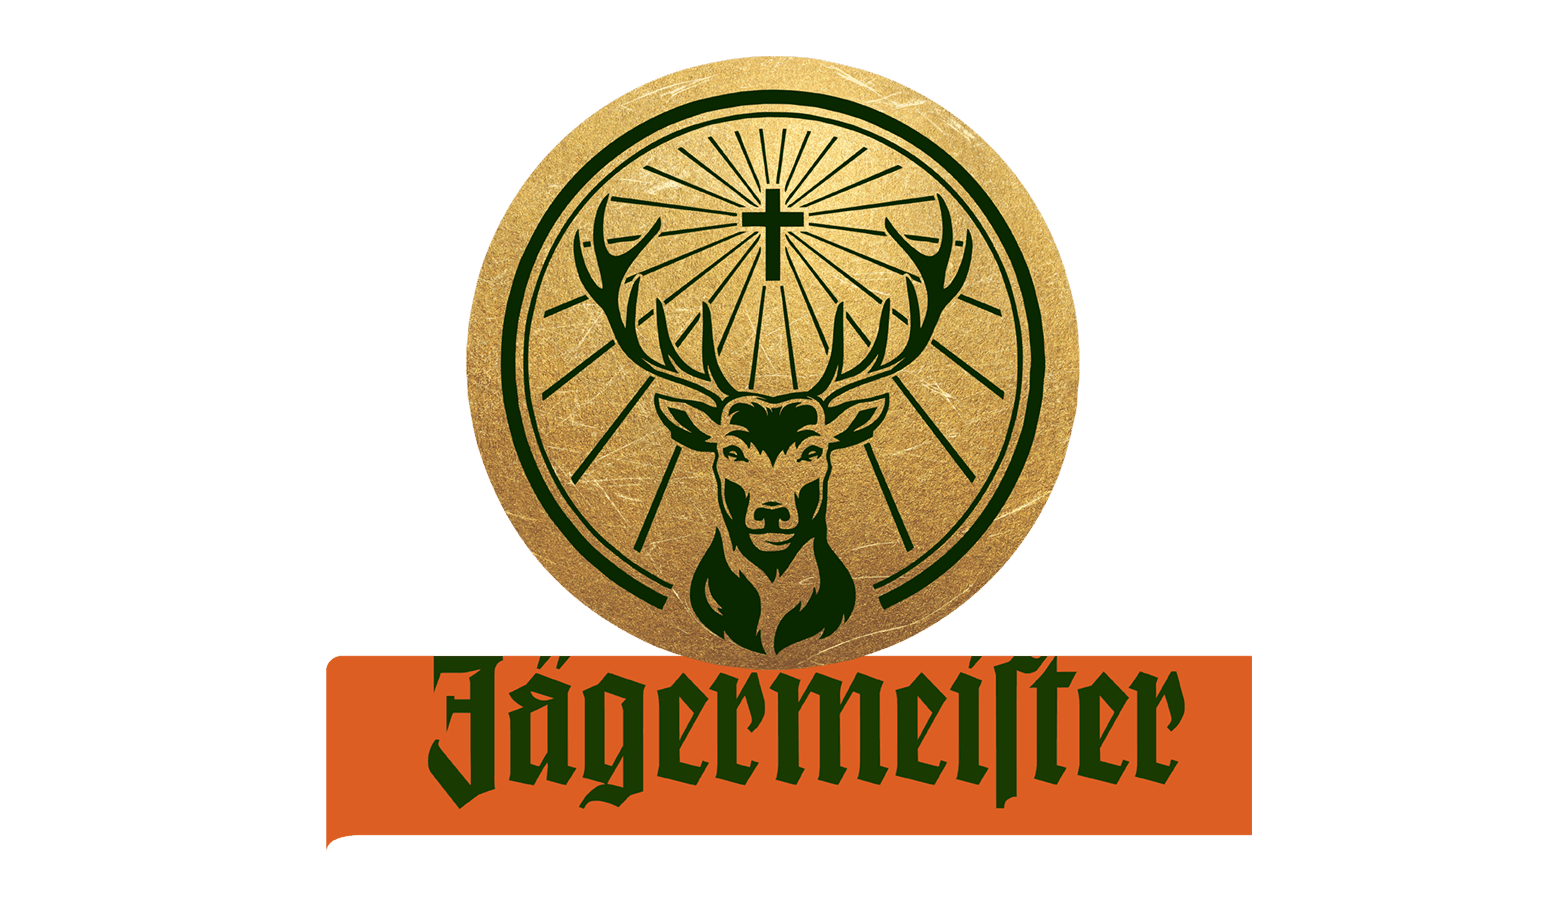 partners-logo-jagermeister-3